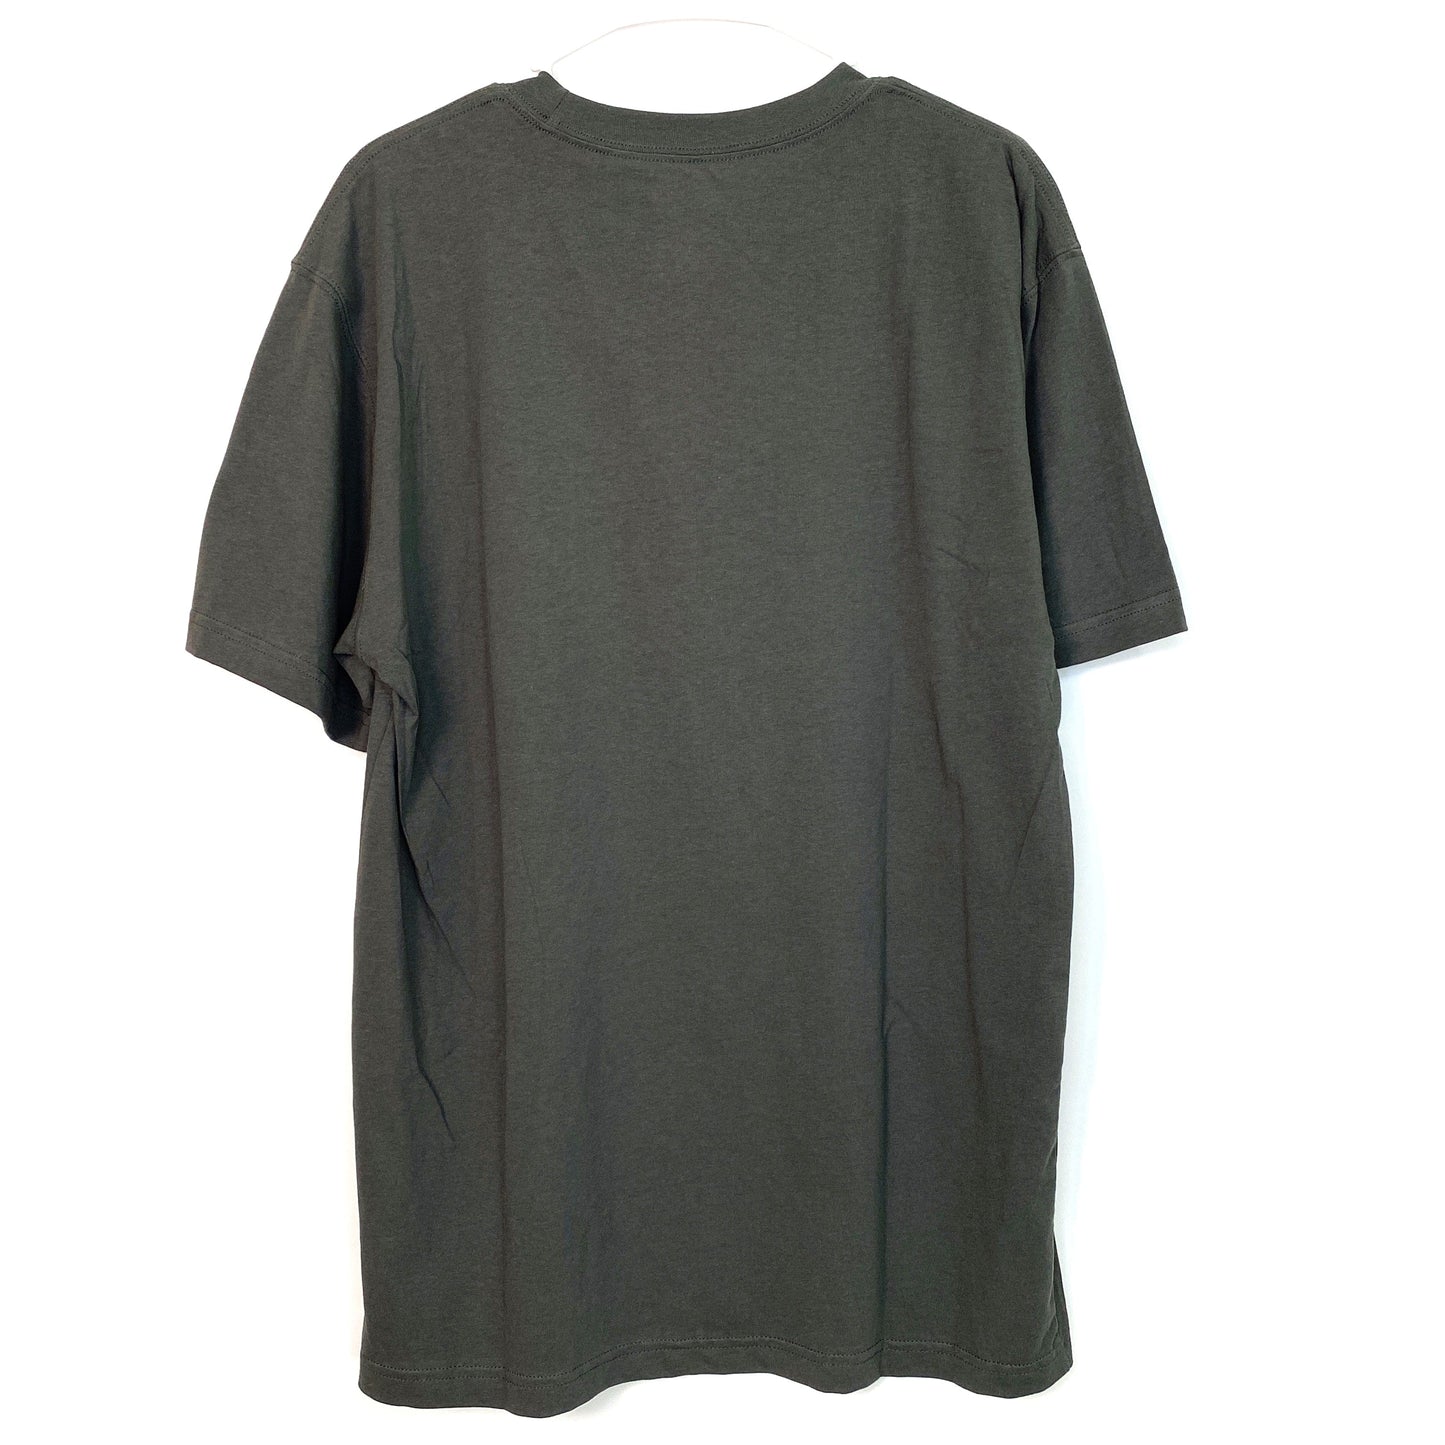 American Flag Dickies Men's Gray T-Shirt - Patriotic Design - Comfortable and Stylish